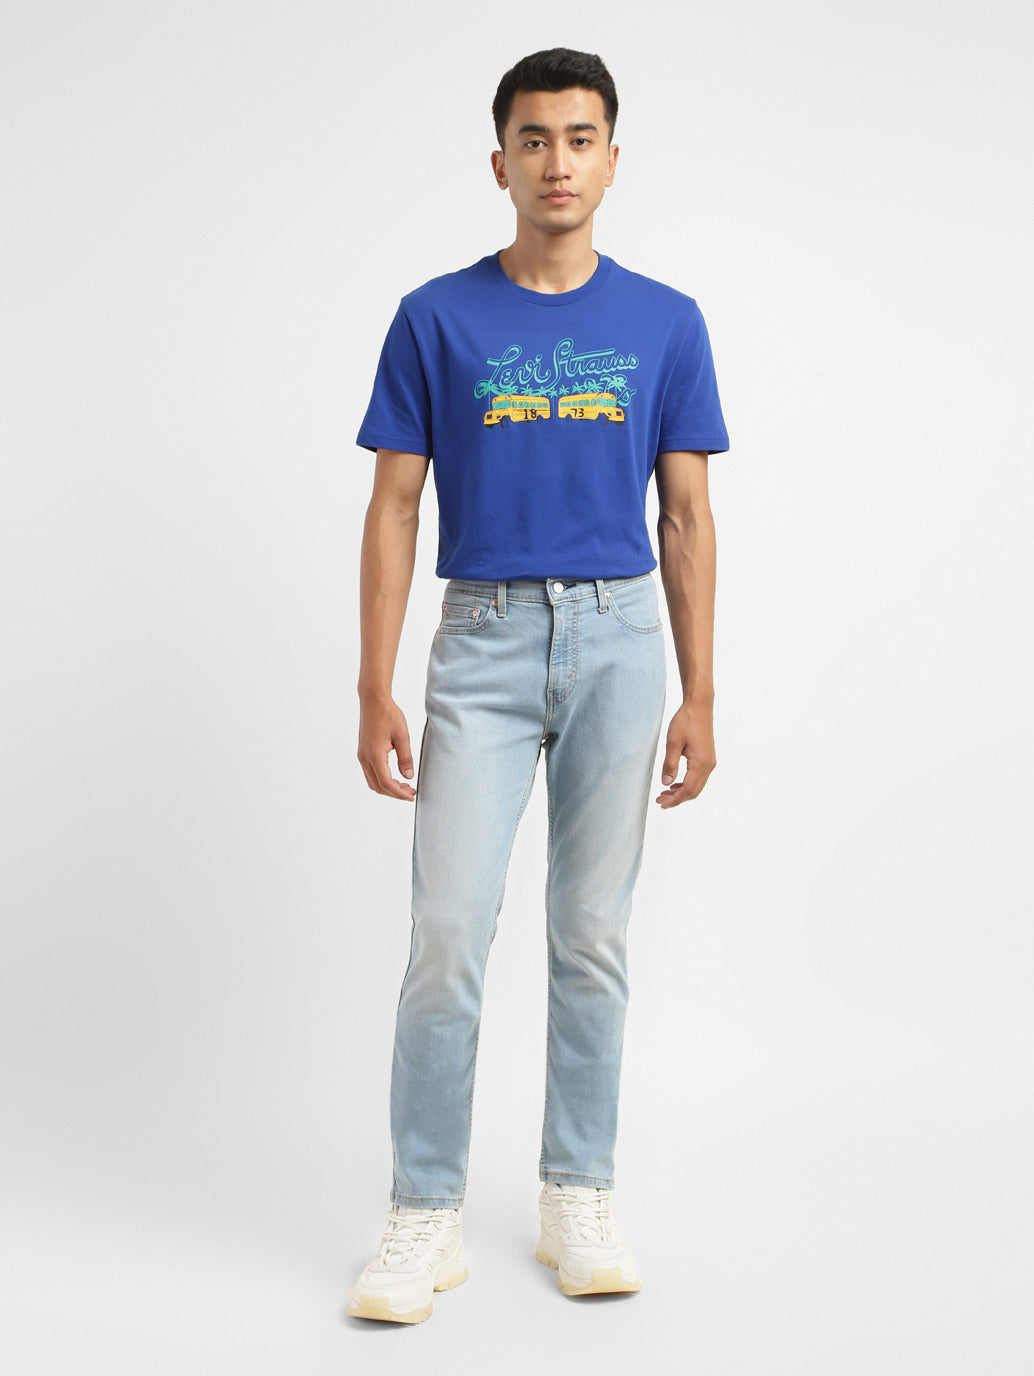 Men's 511 Blue Slim Fit Jeans